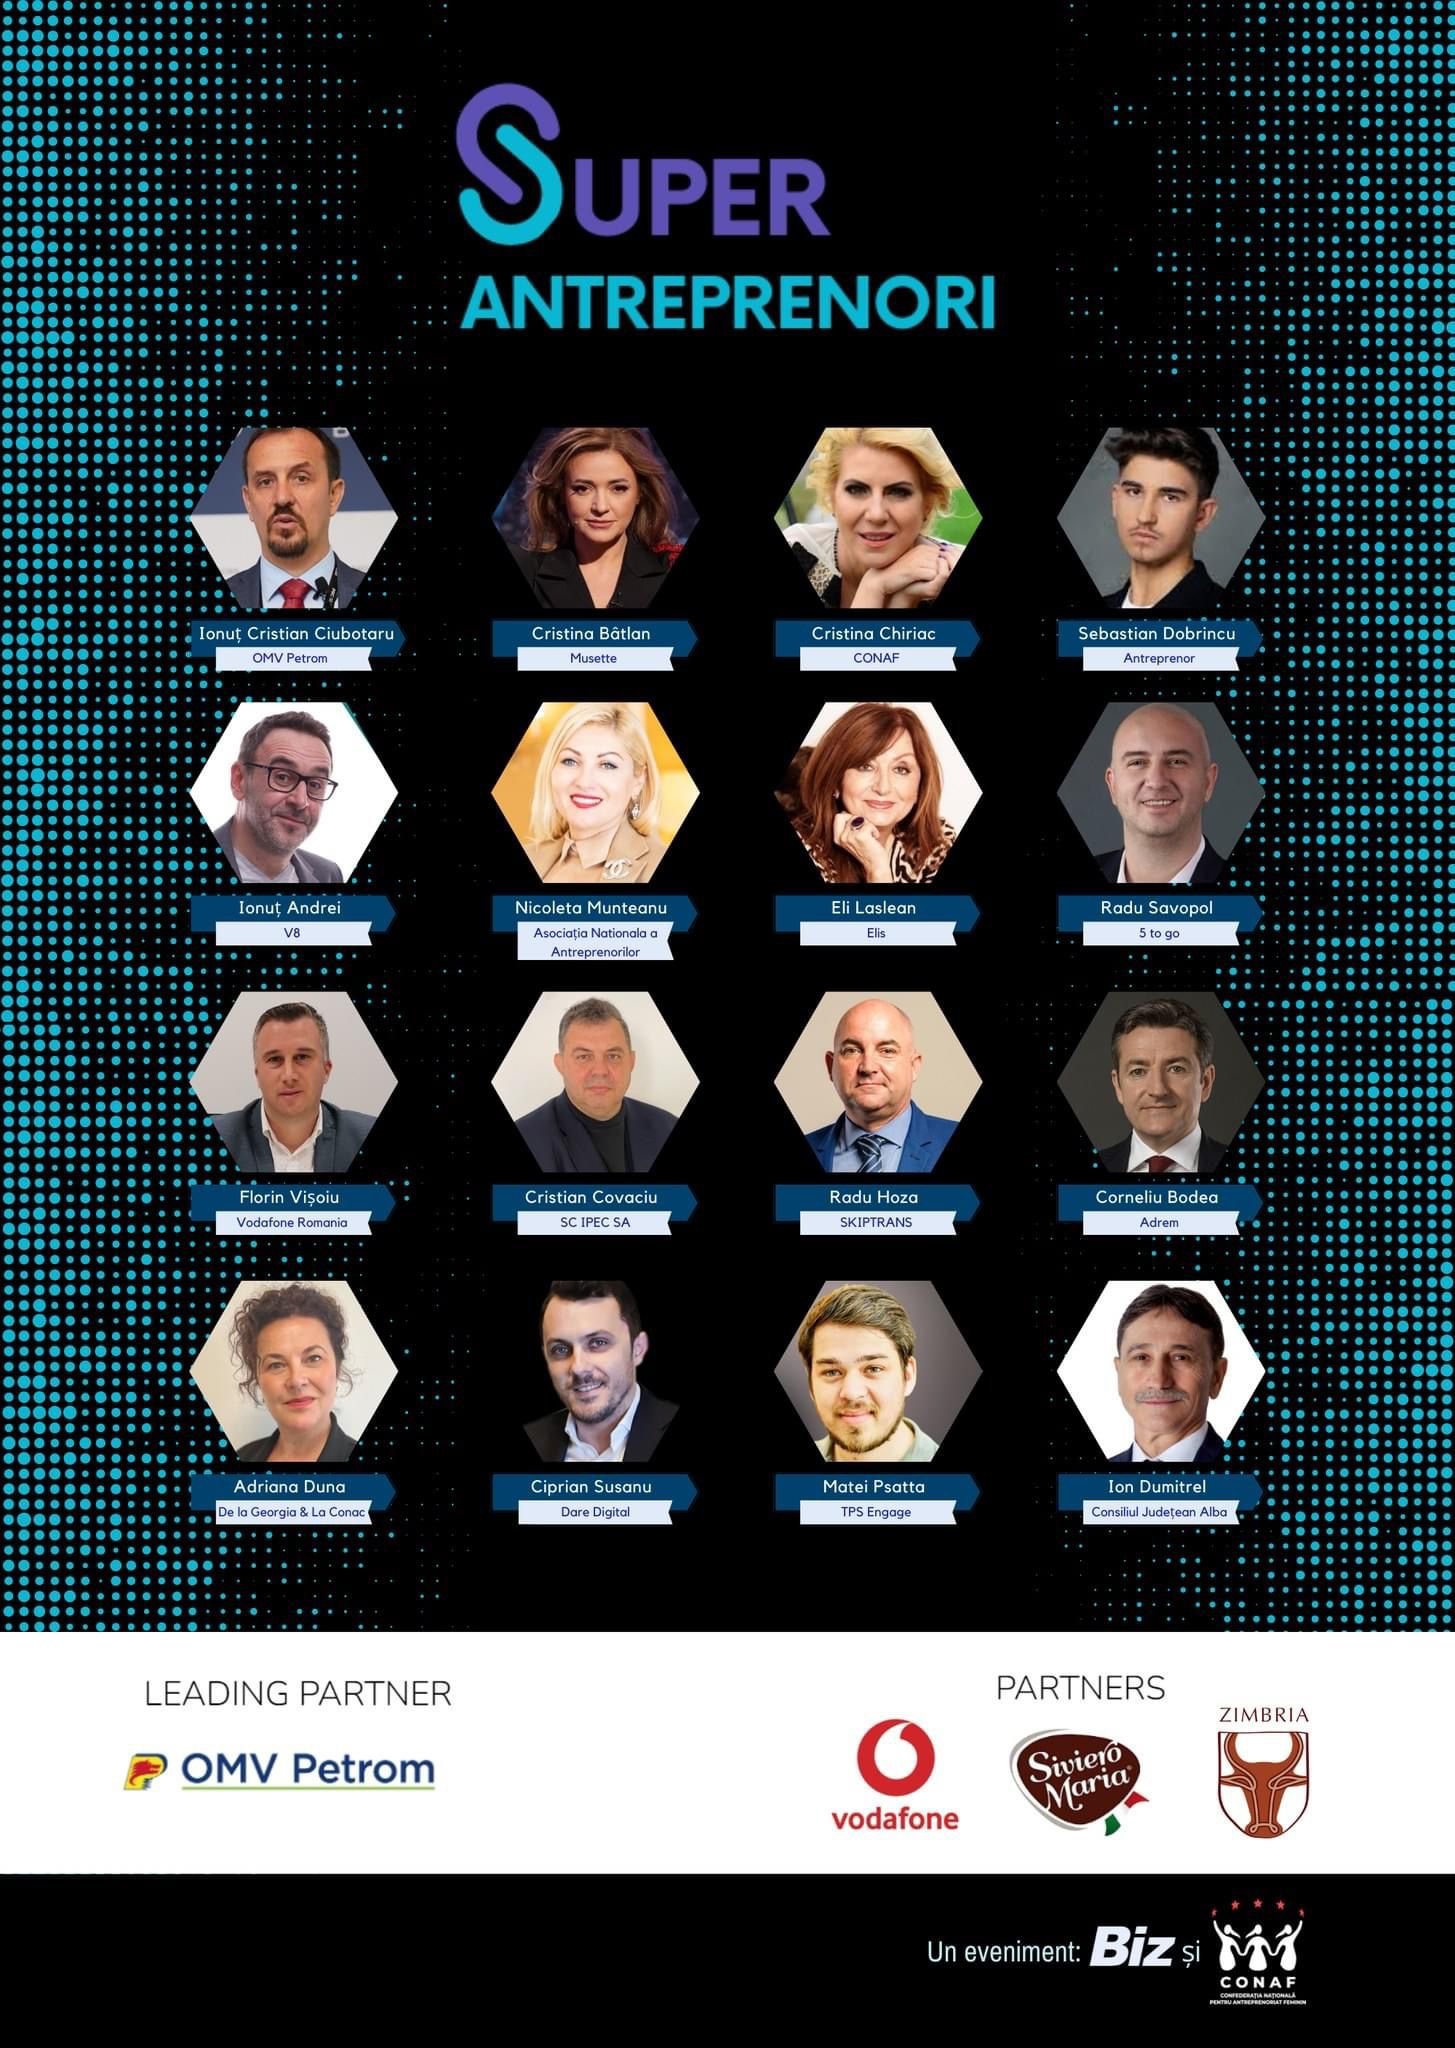 SUPER Antreprenorii își dau întâlnire la Alba Iulia pe 8 iunie